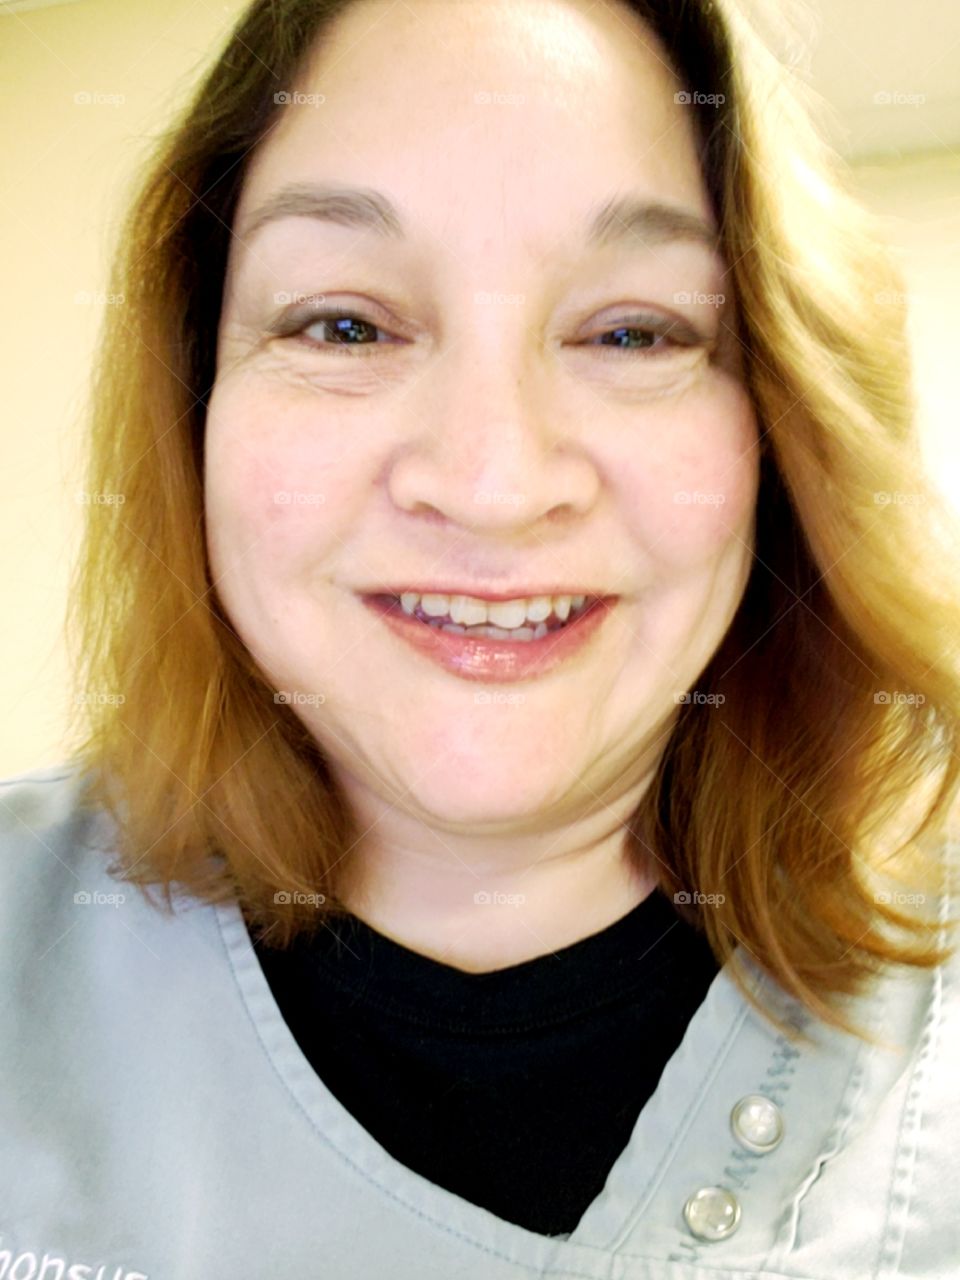 selfie smiling woman wearing medical scrubs